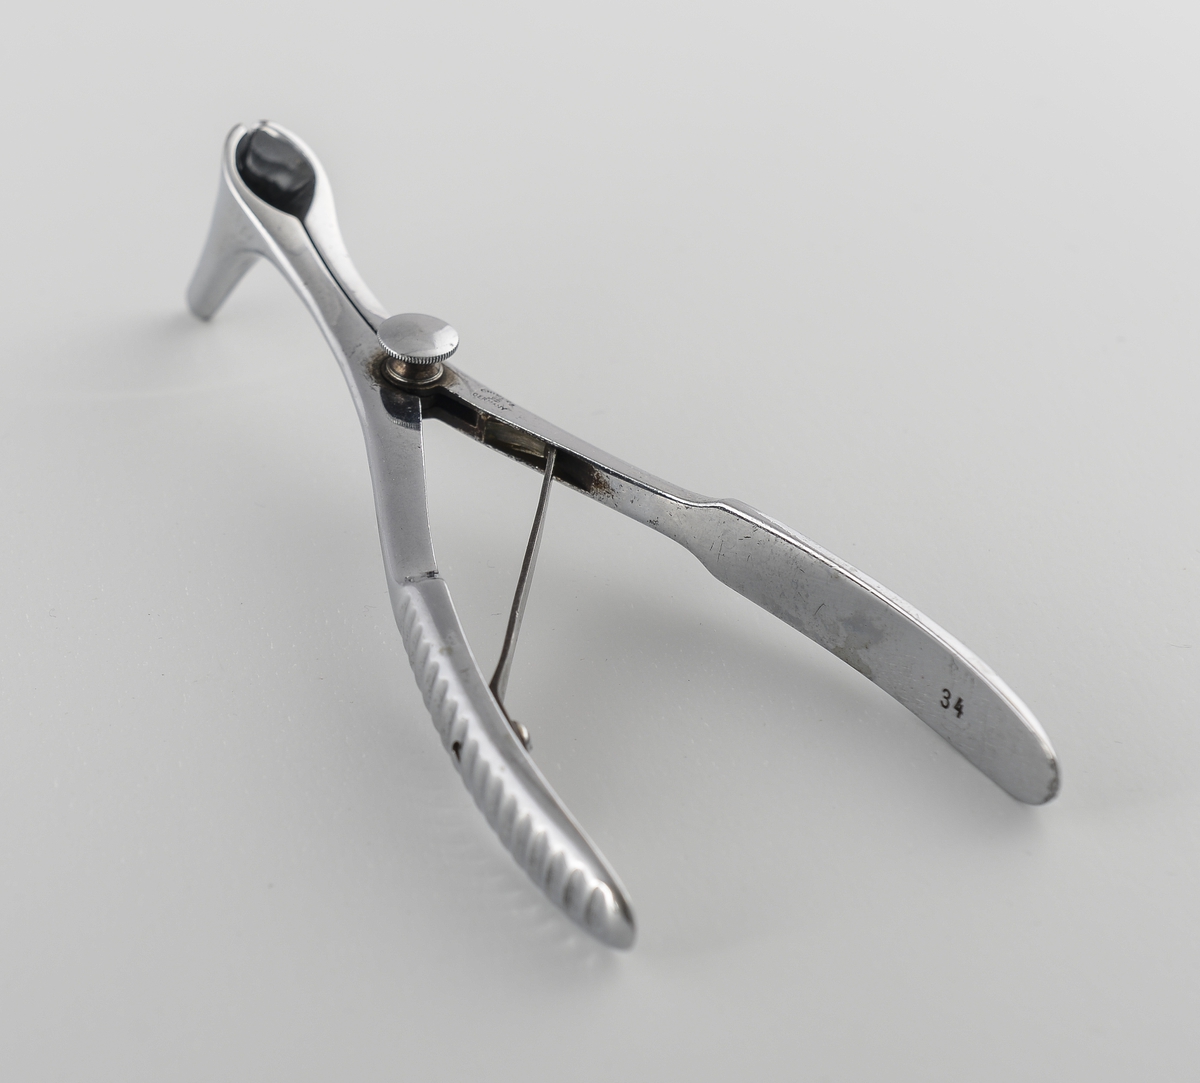 Et tanglignende metallinstrument, når man presser sammen skaftene spriker frontdelen man stikker i nesen.